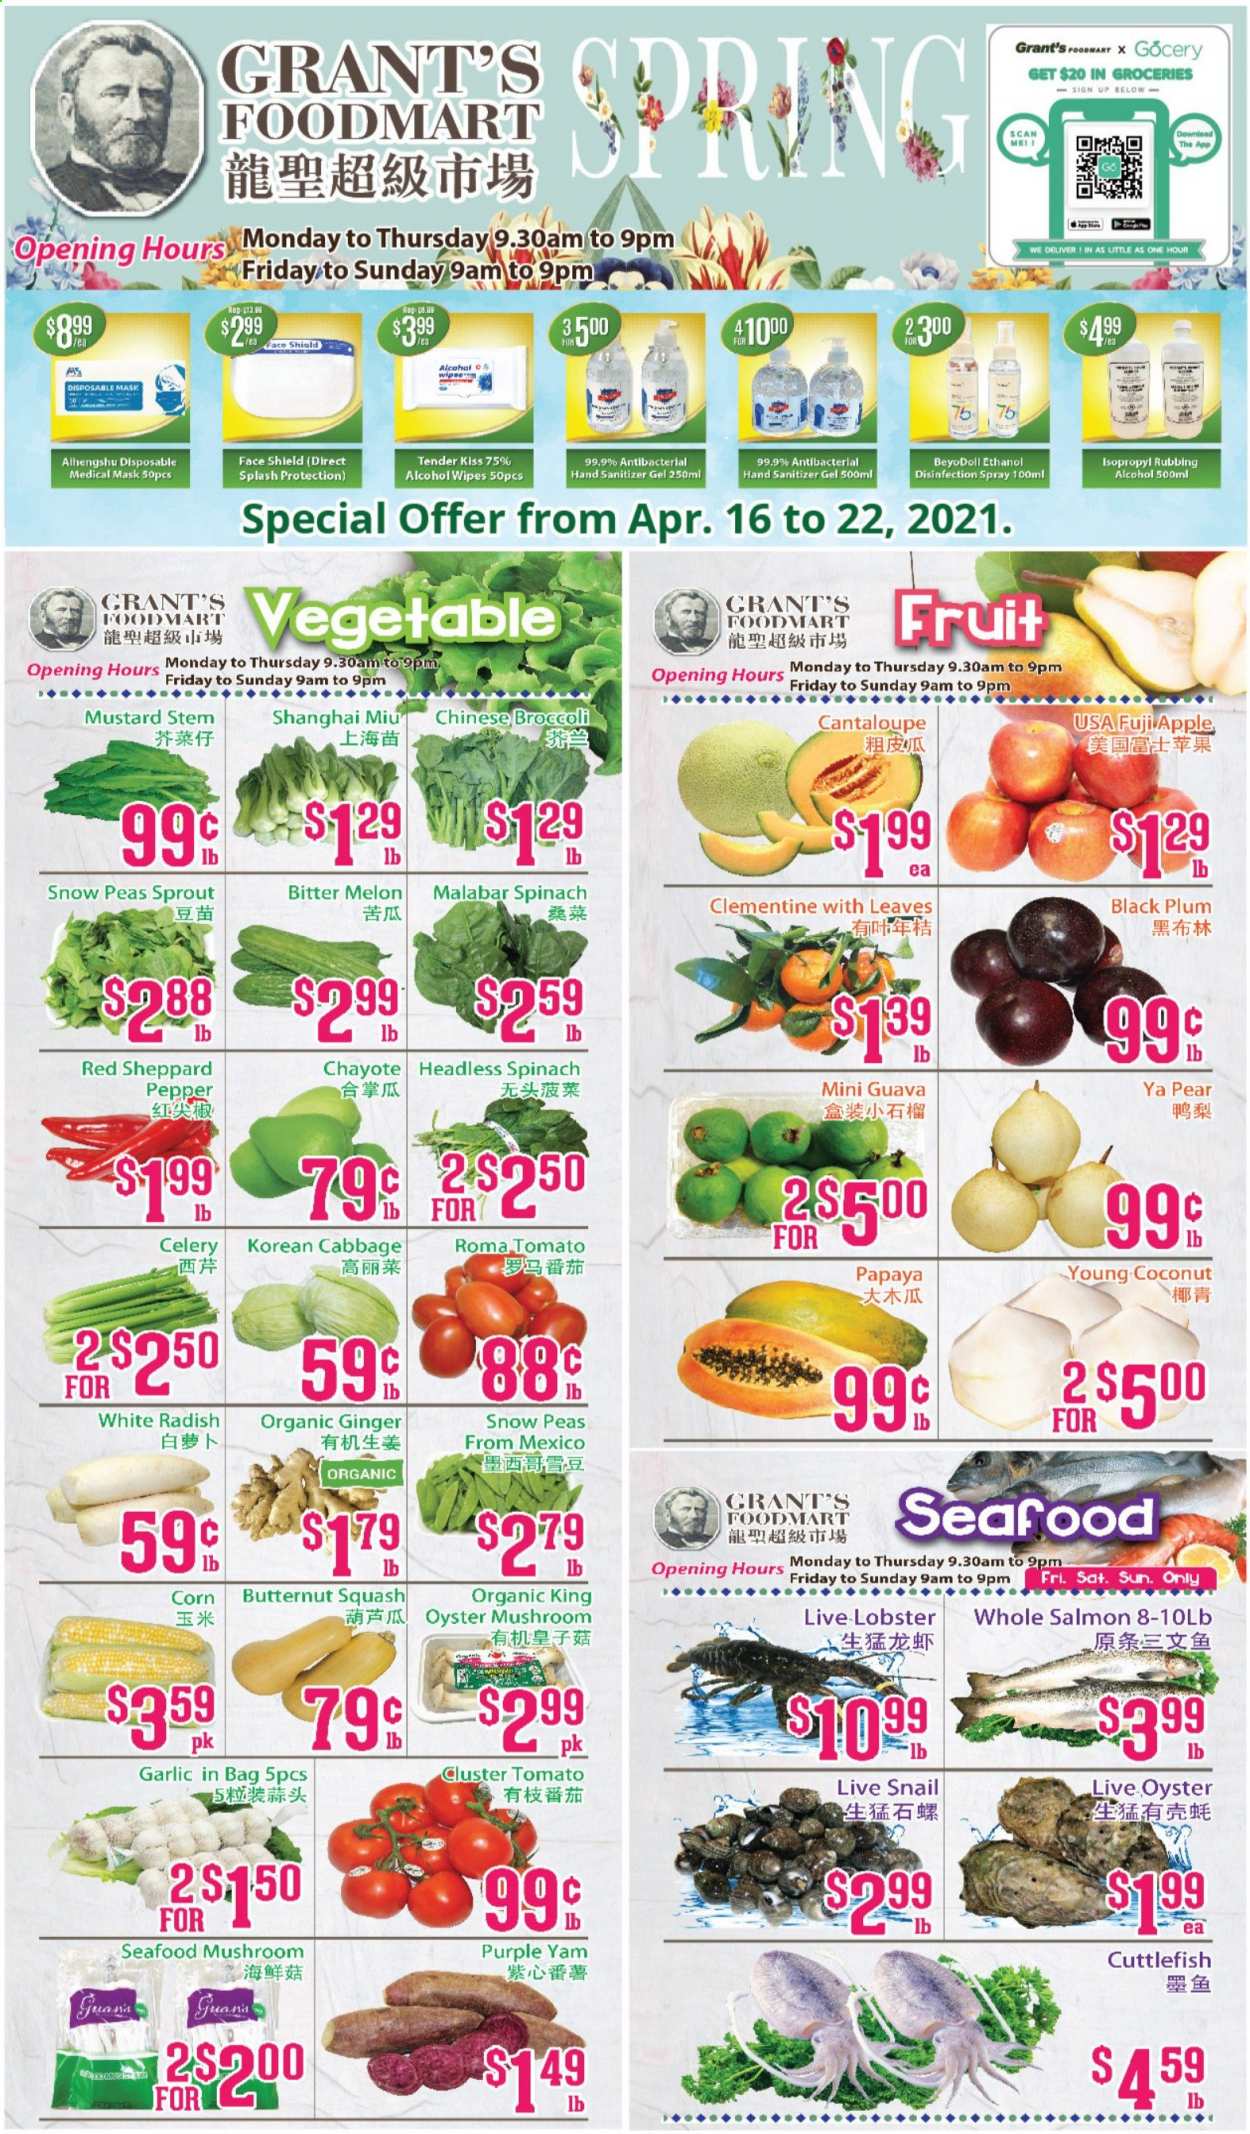 thumbnail - Circulaire Grant's Foodmart - 16 Avril 2021 - 22 Avril 2021 - Produits soldés - melon, butternut, clémentines. Page 1.